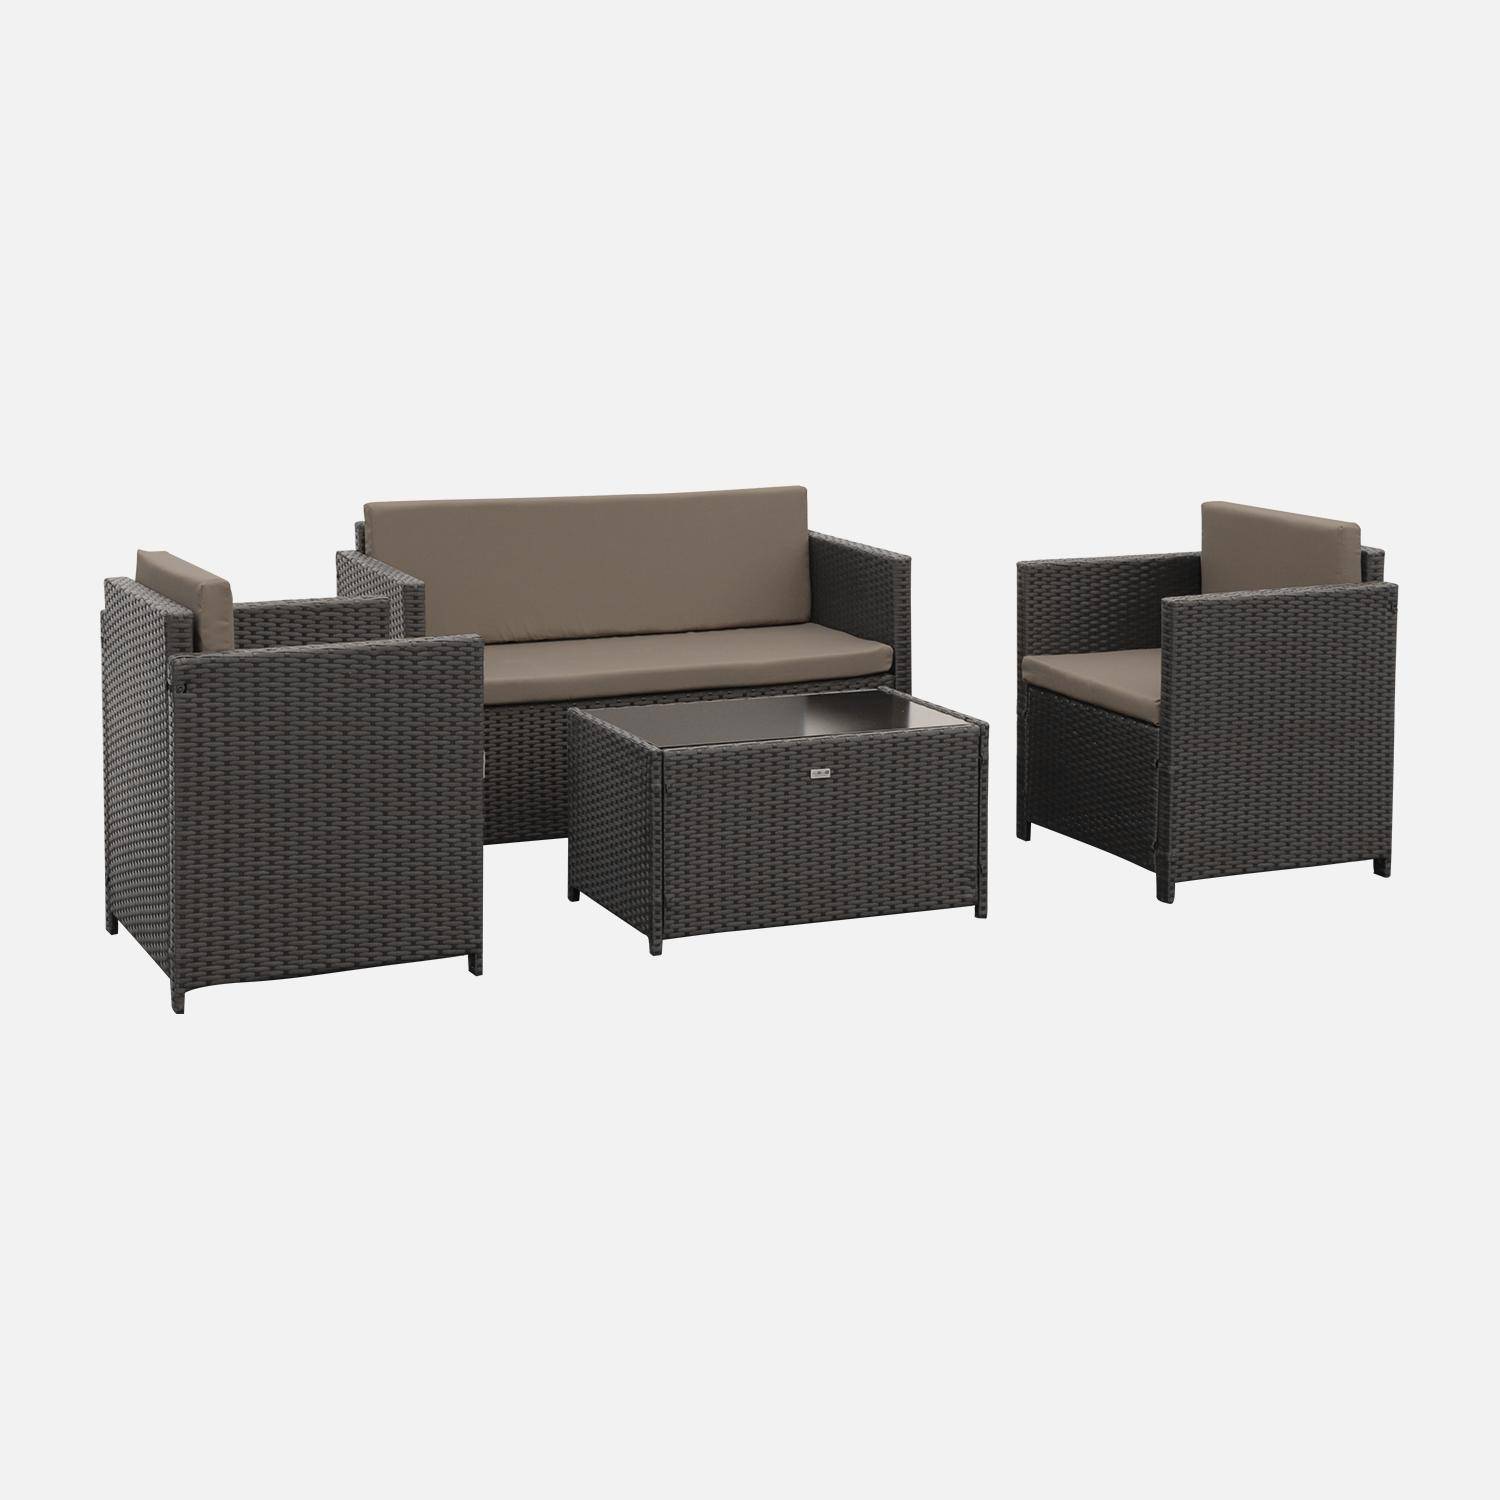 4-seater polyrattan garden sofa set - sofa, 2 armchairs, coffee table - Perugia - Brown rattan, Chocolate cushions Photo2